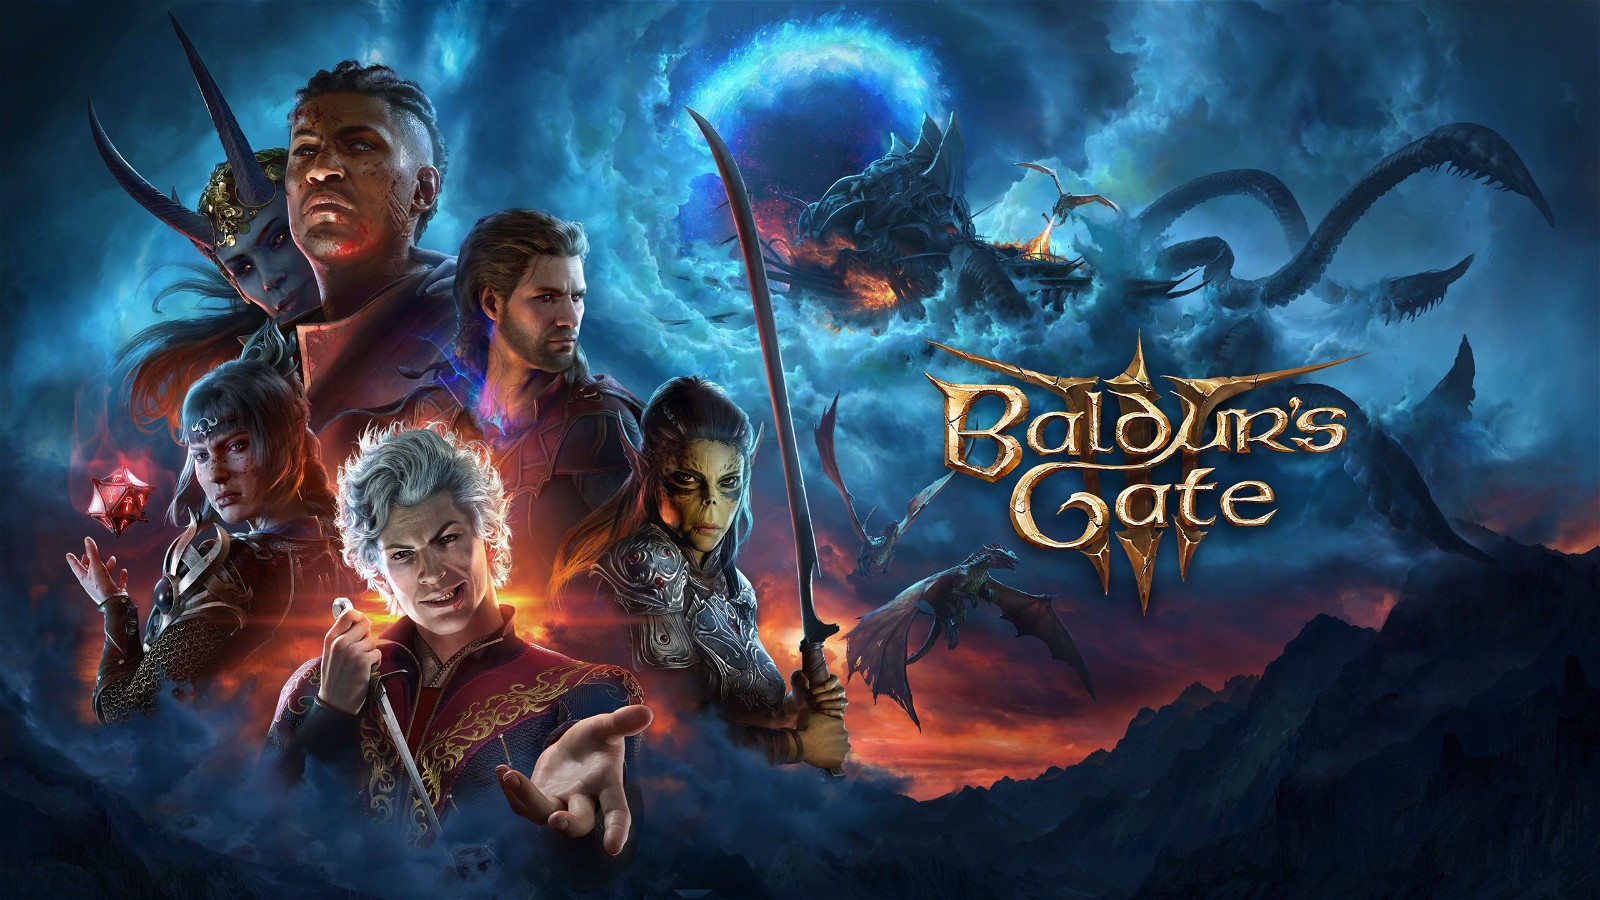 Baldur's Gate 3 announces expansion to Warsaw, Poland.